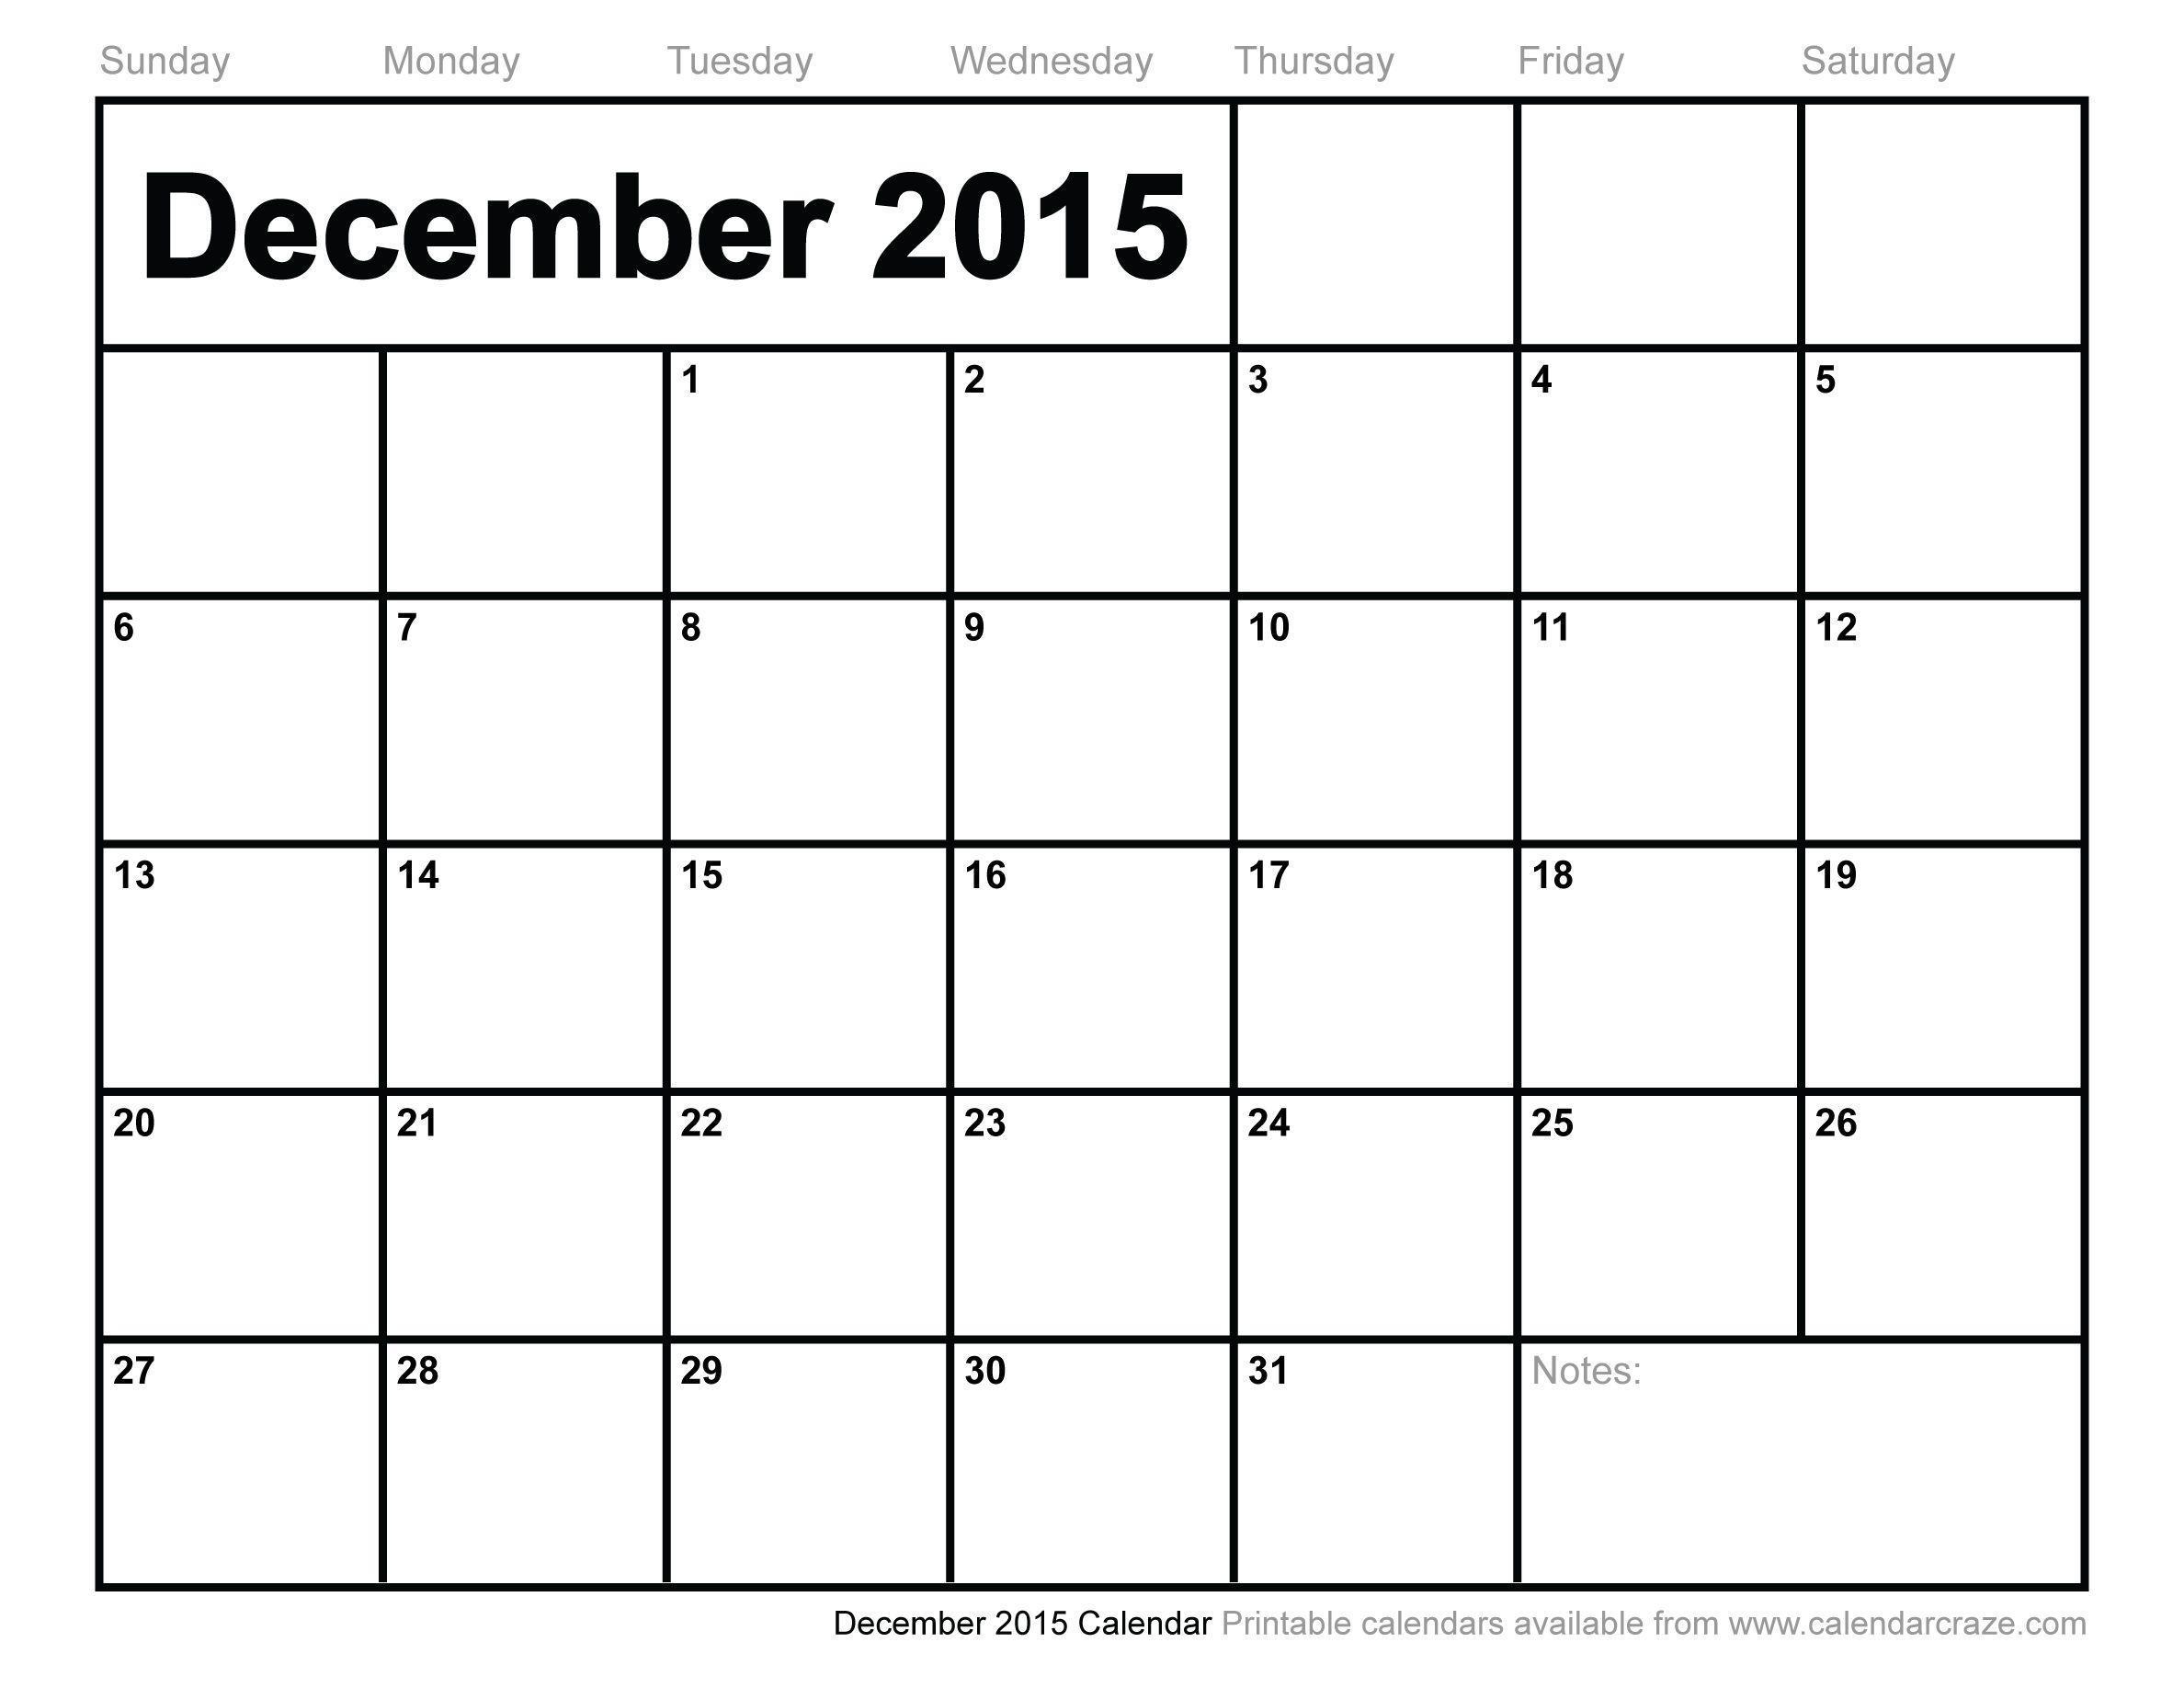 Calendar 2015 Wallpaper for PC. Full HD Picture